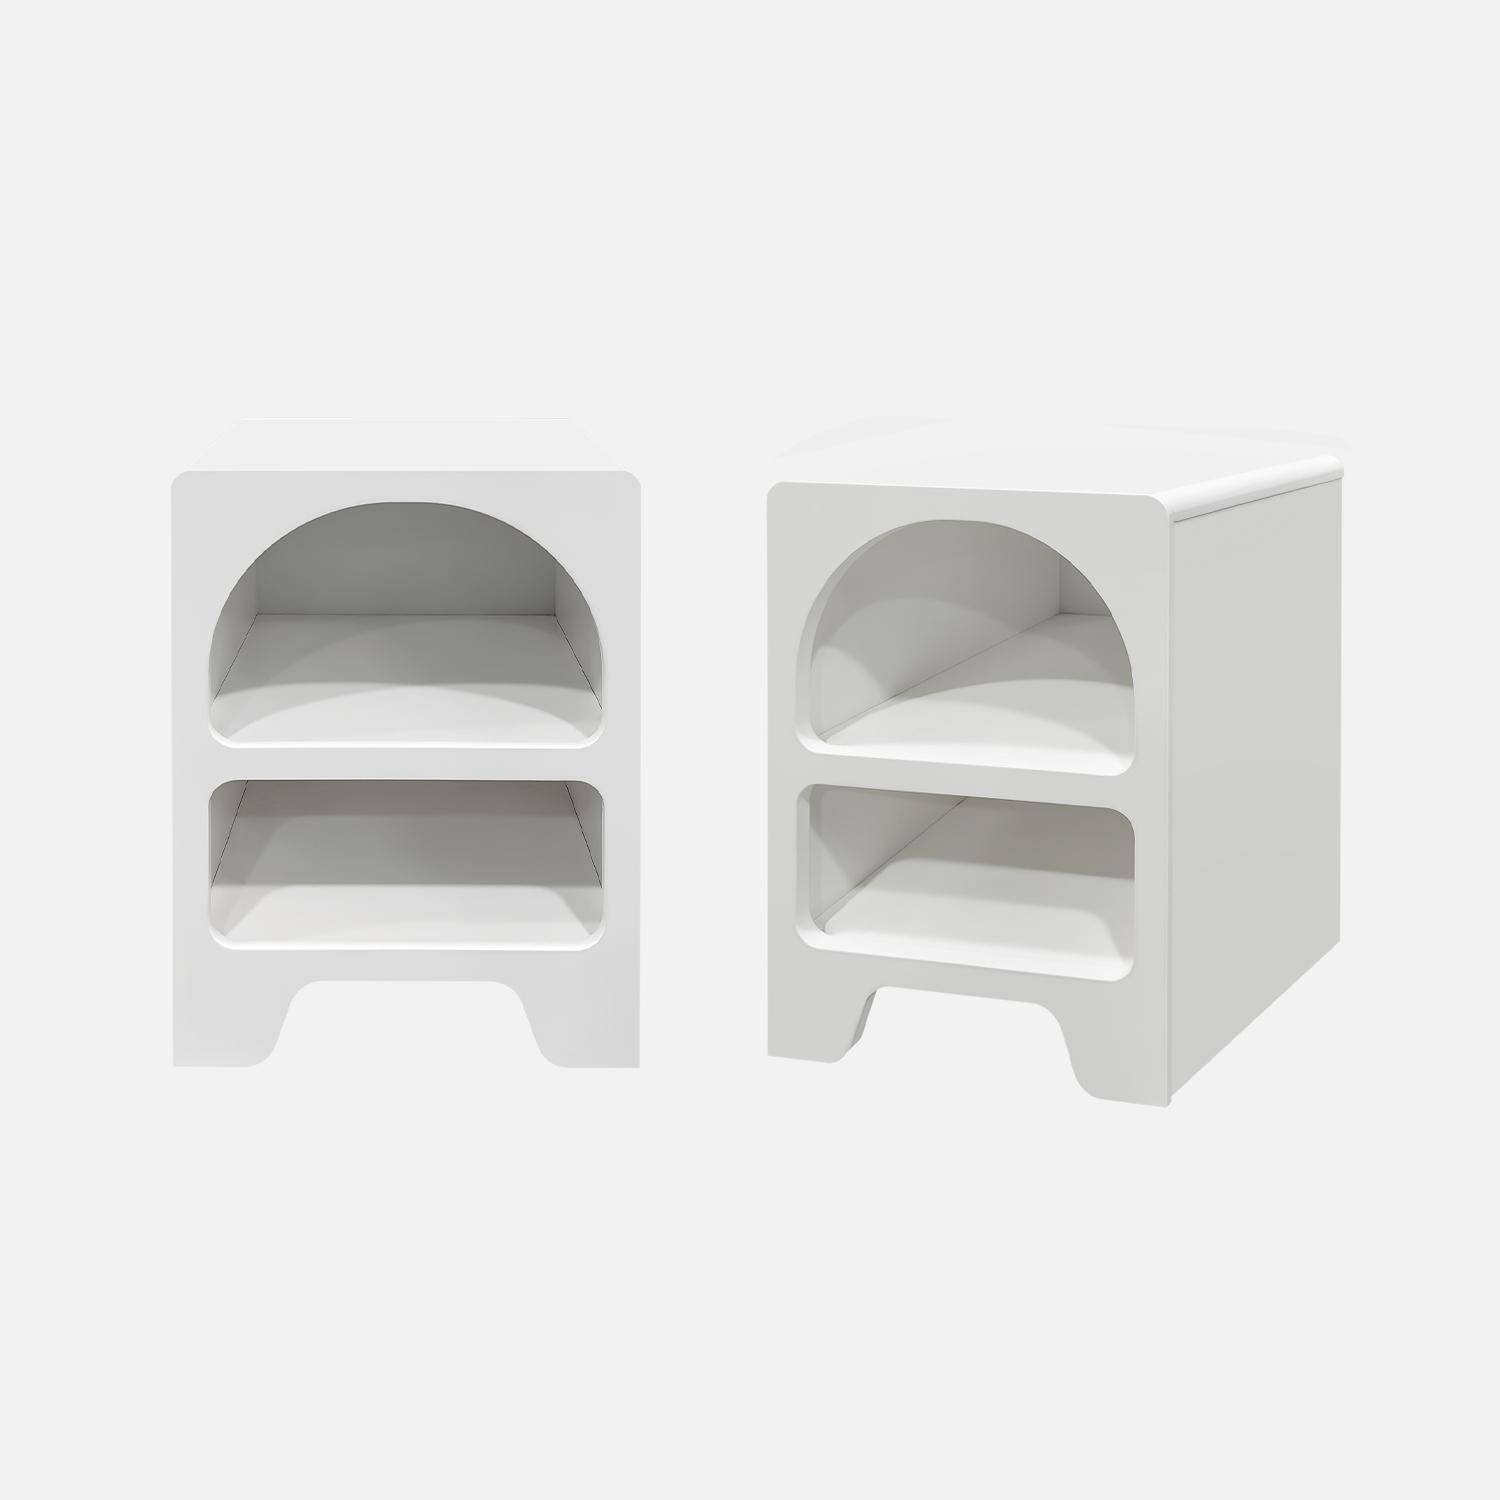 White wood-effect organic bedside table, 2 storage niches (set of 2),sweeek,Photo1